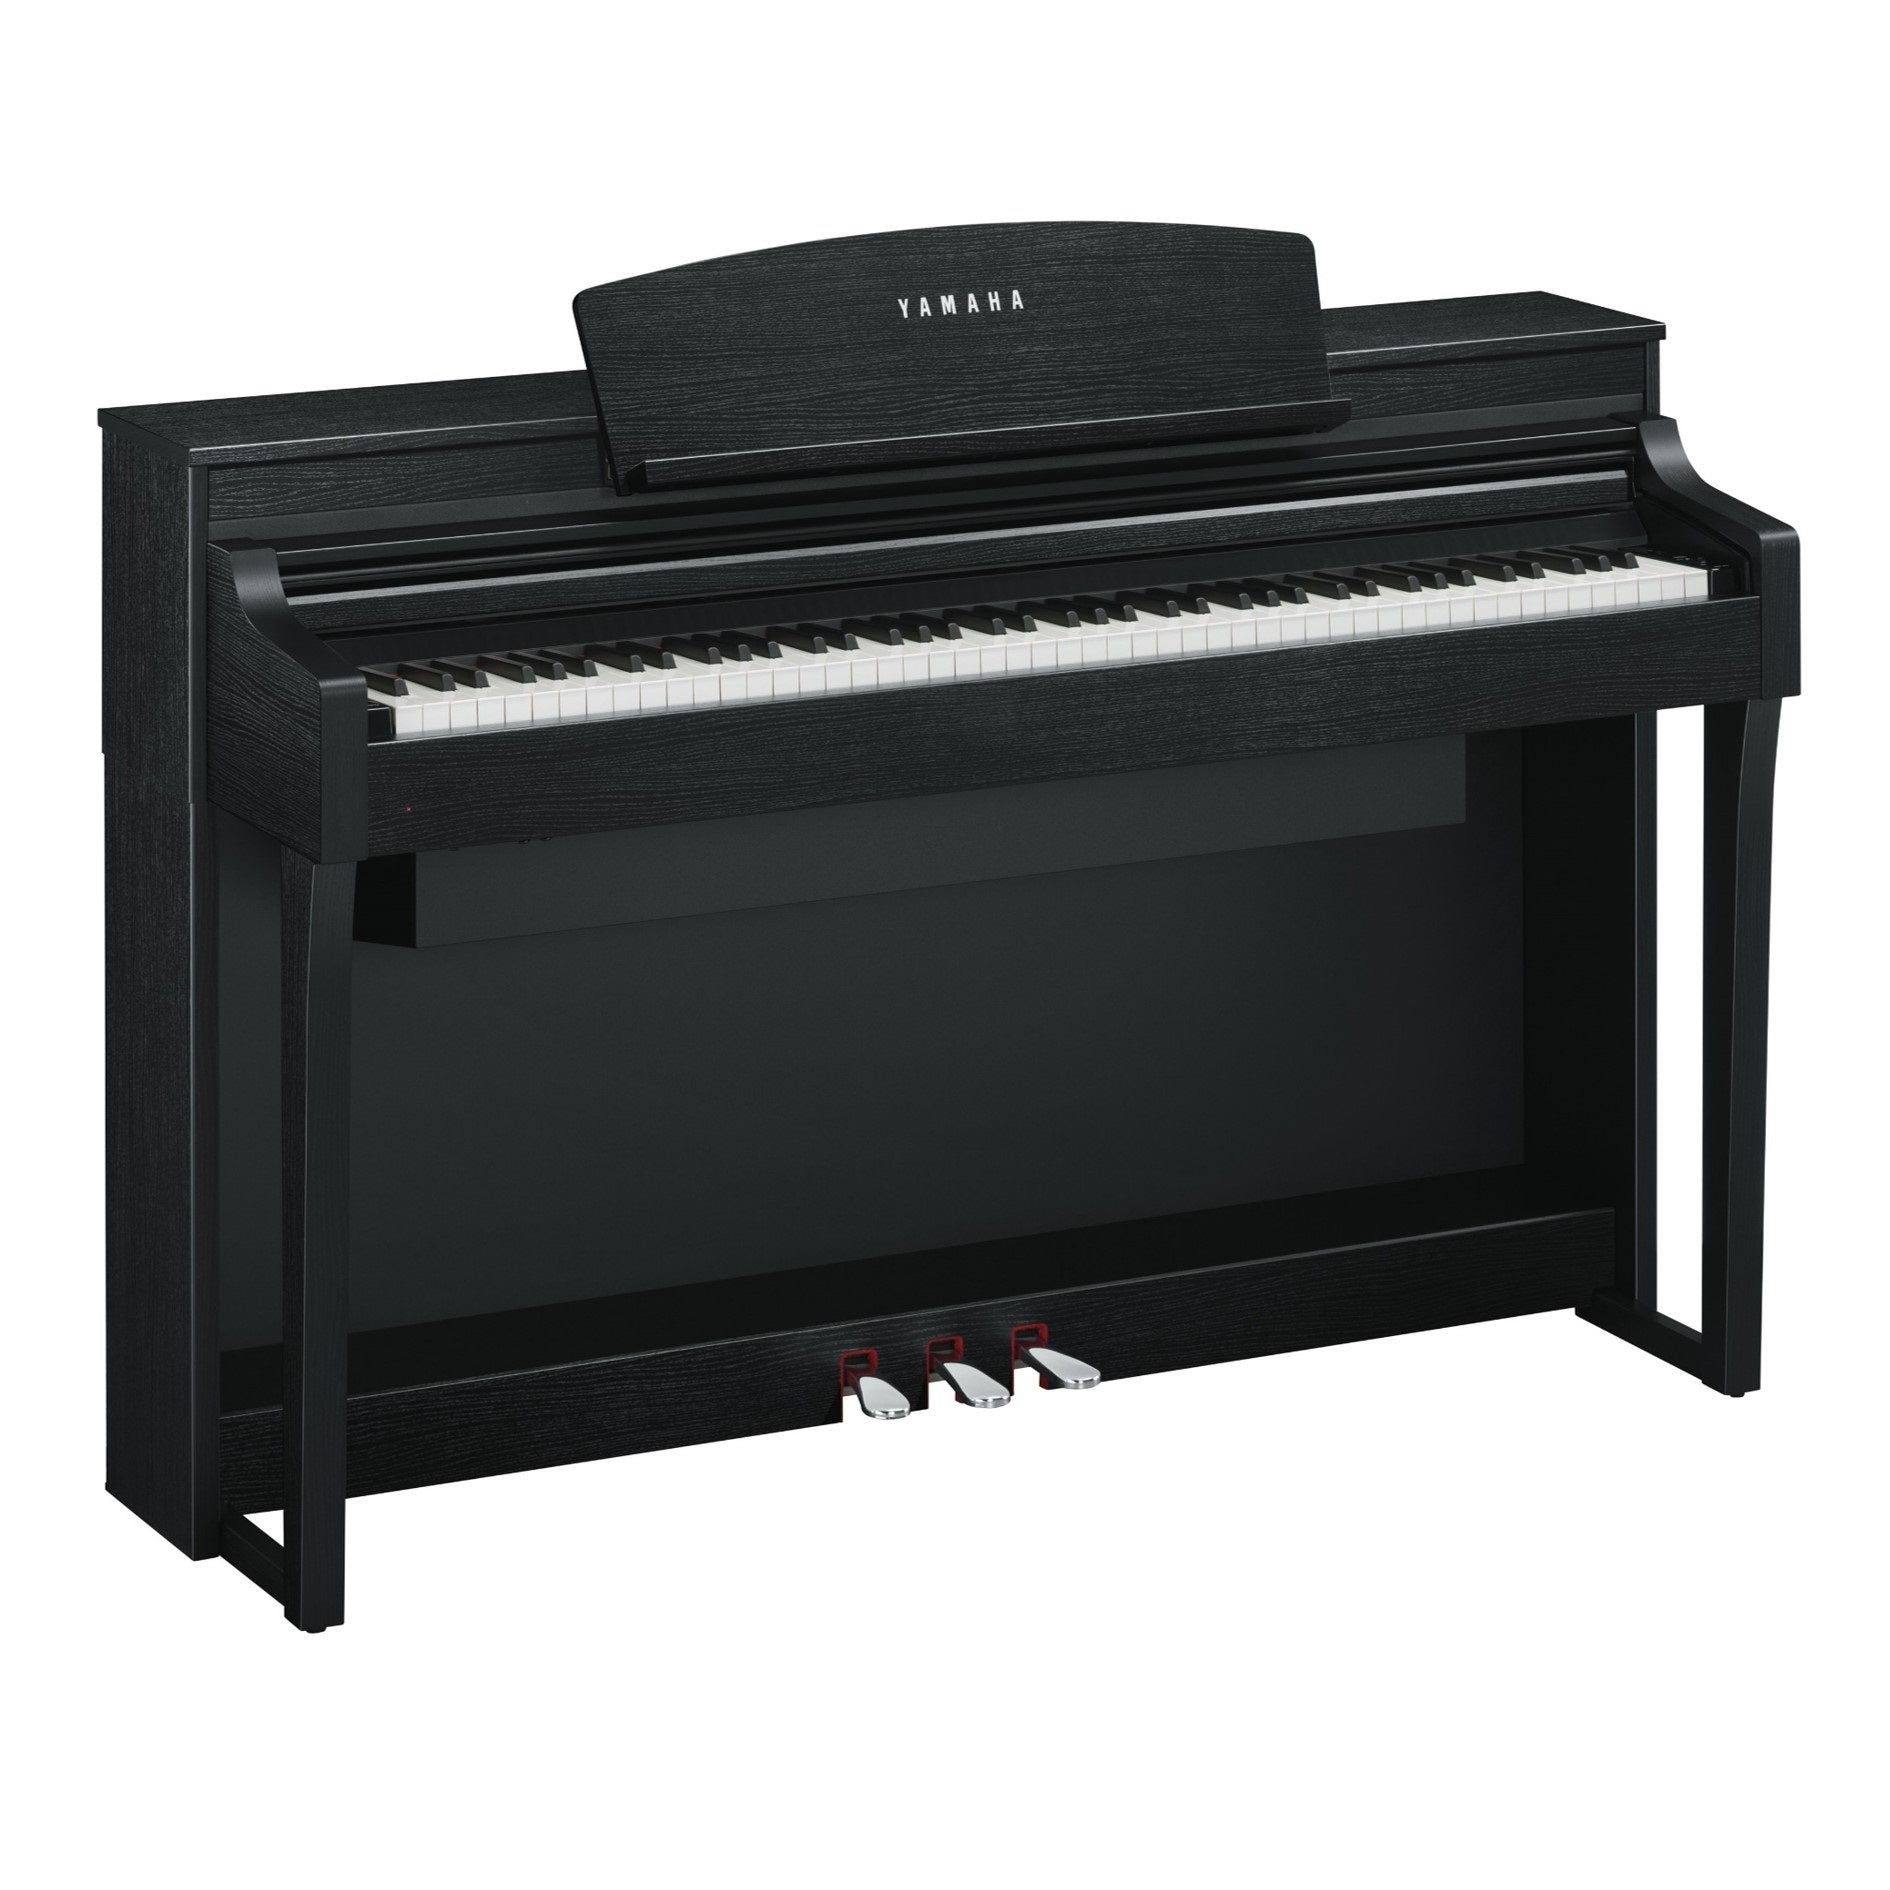 [Display Clearance] Yamaha Clavinova CSP-170 Black Digital Piano